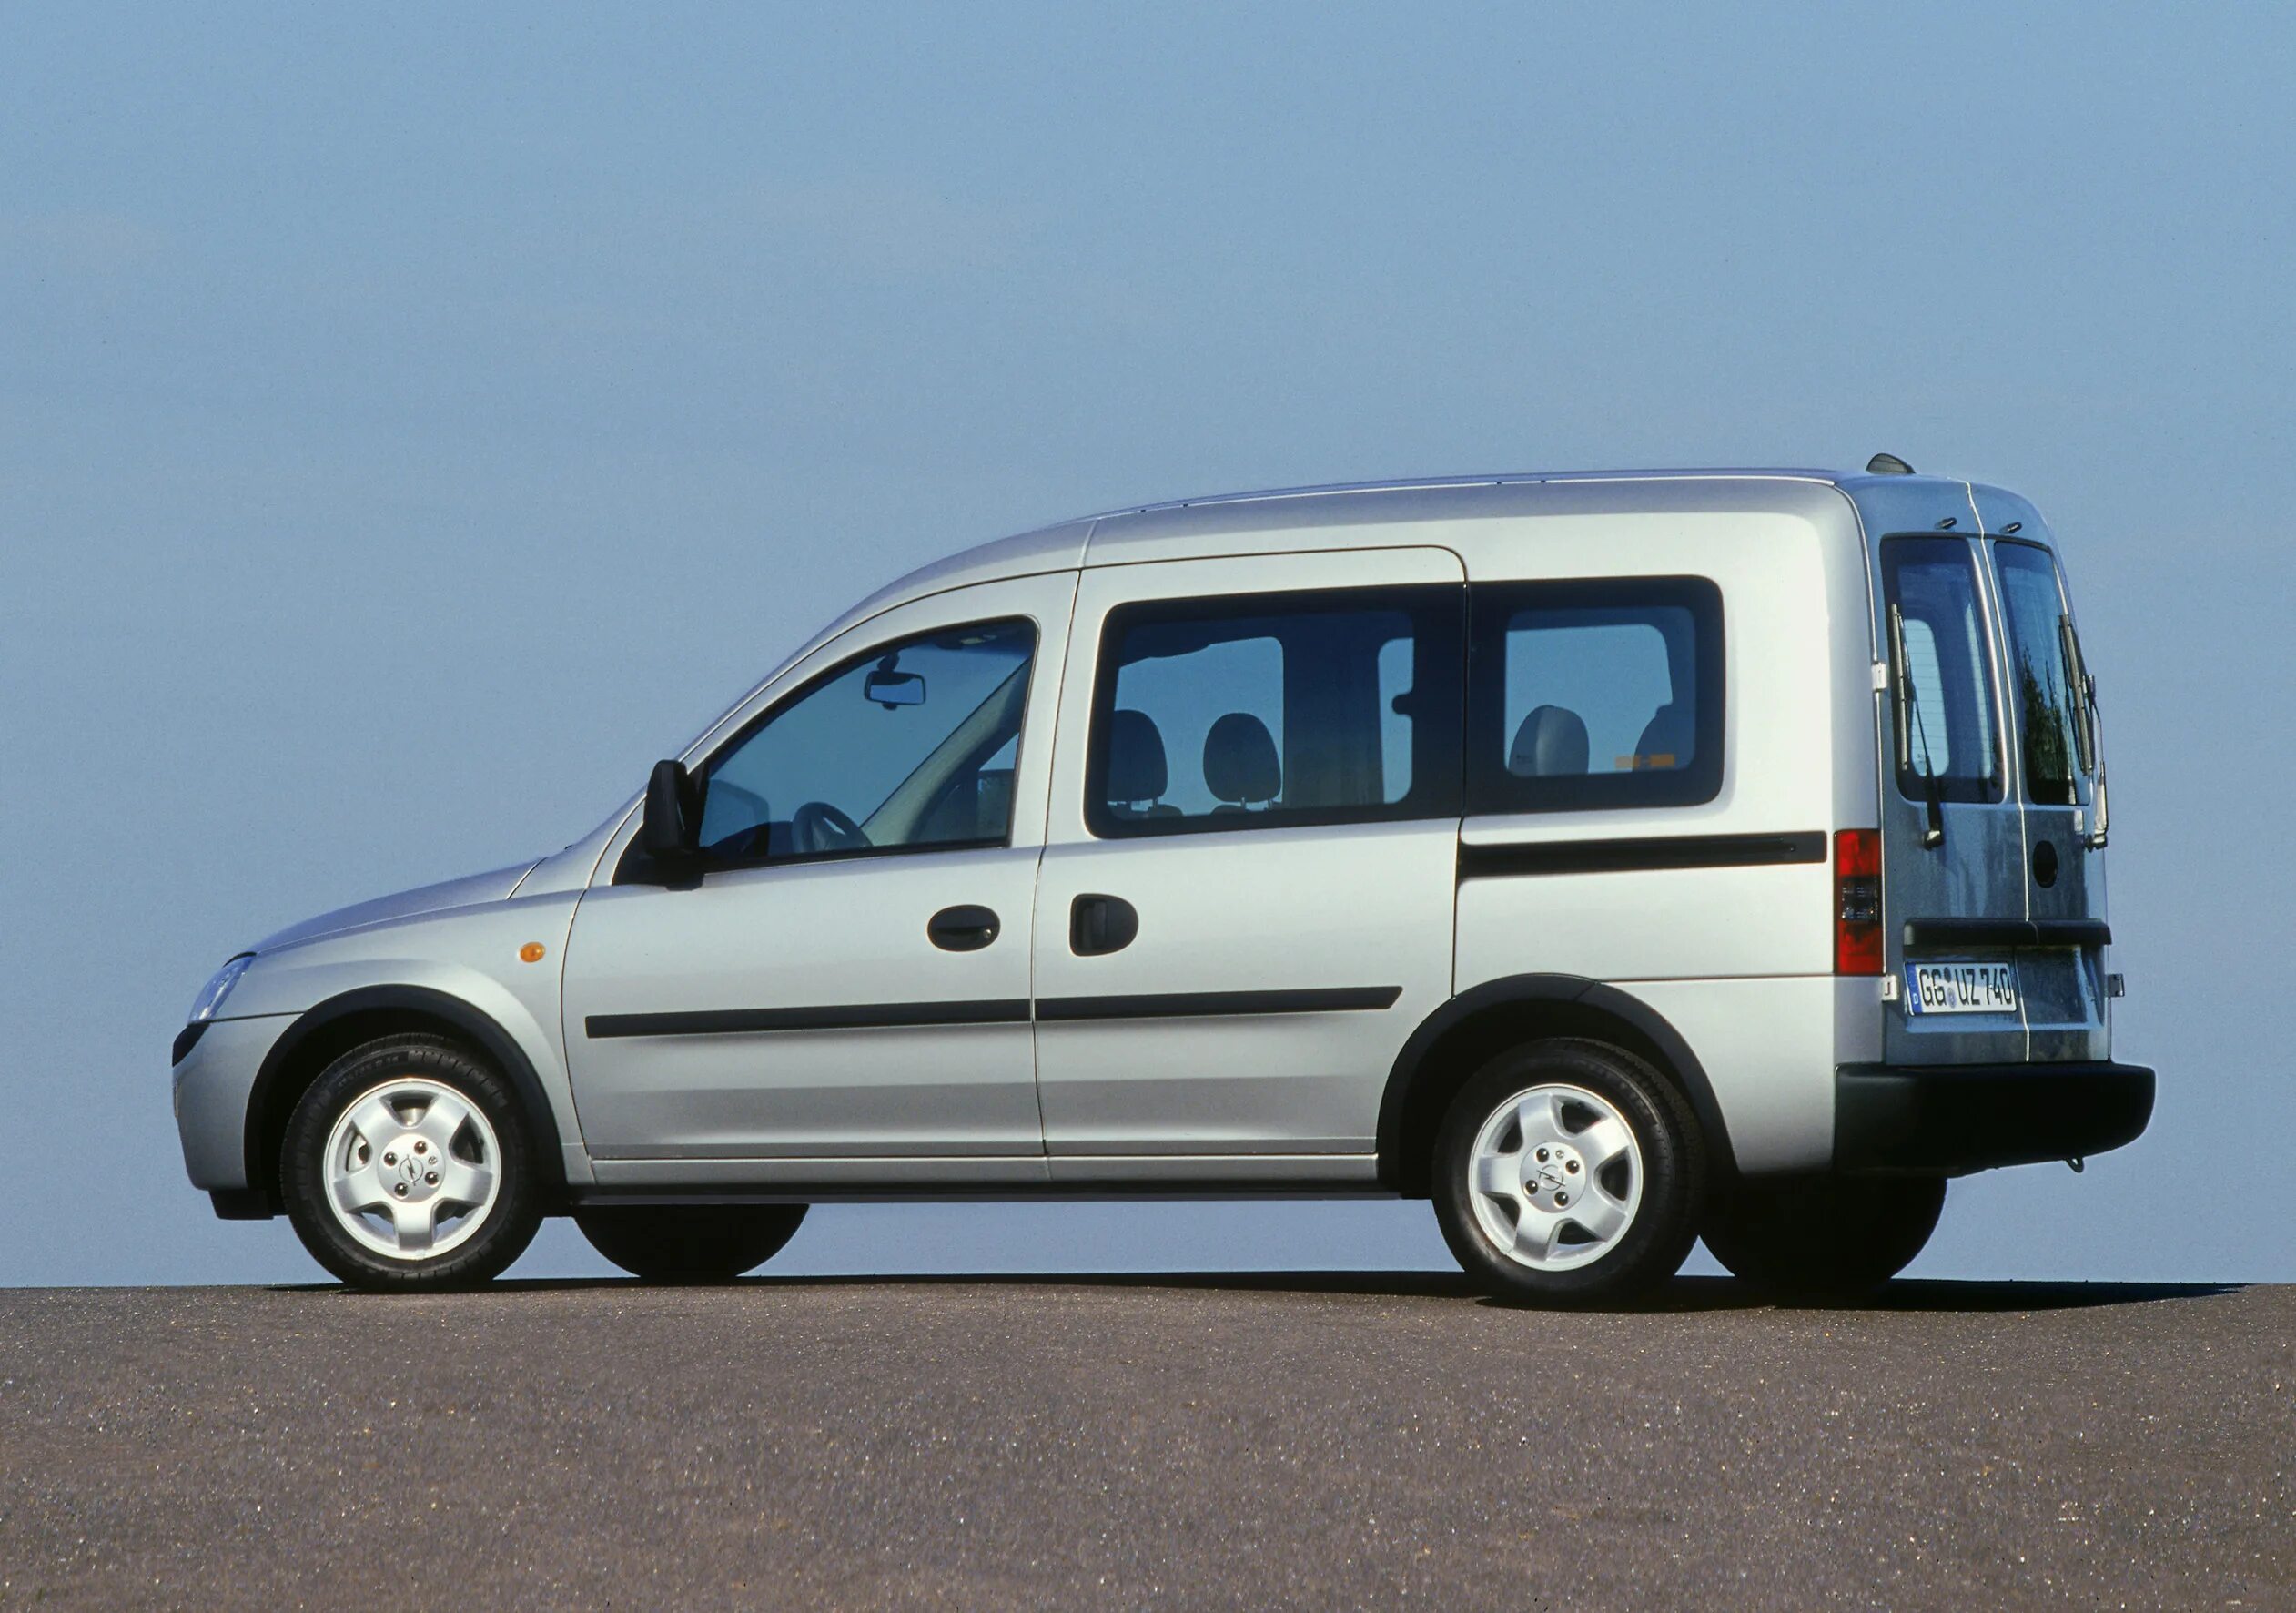 Opel Combo c 2003. Opel Combo 2001. Combo c 2001 Opel. Опель комбо 2002.